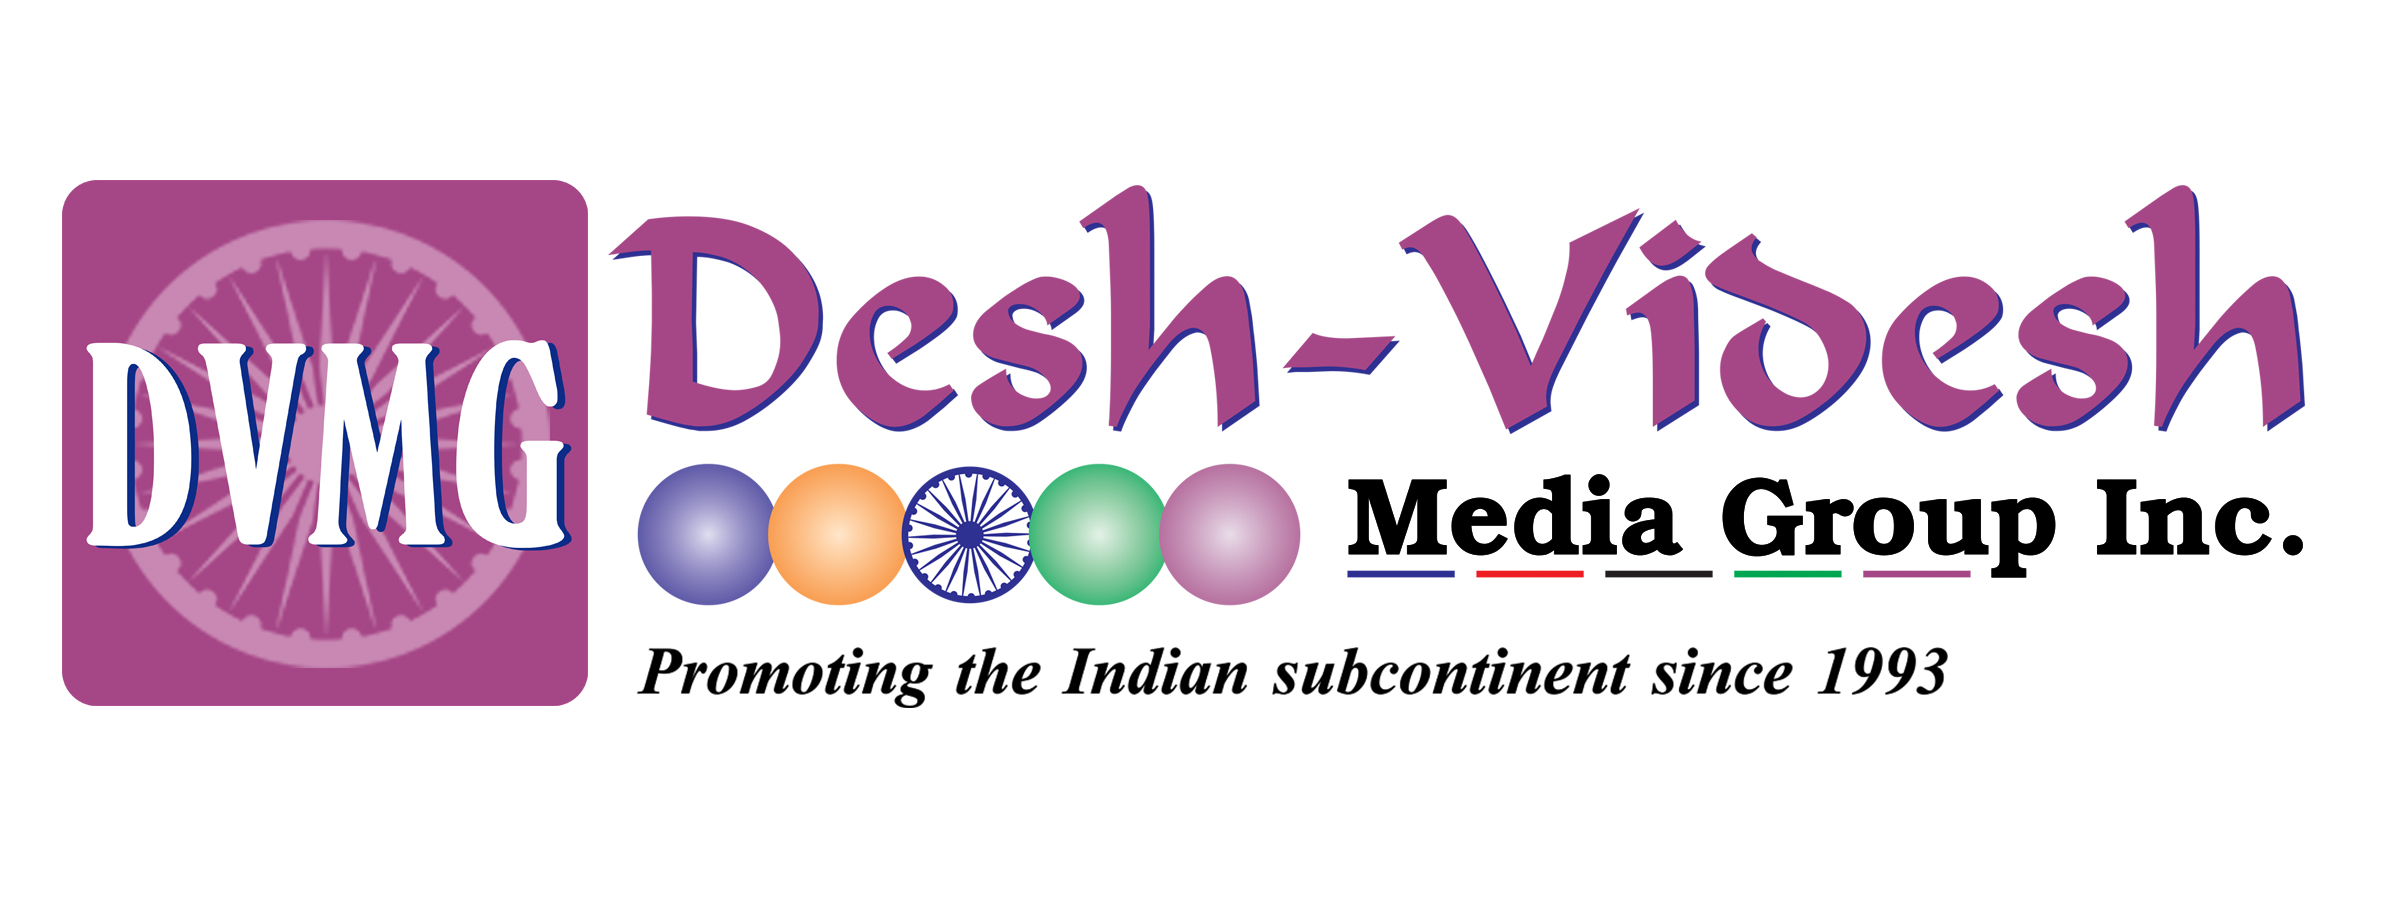 DESH VIDESH MEDIA GROUP NEW LOGO 1